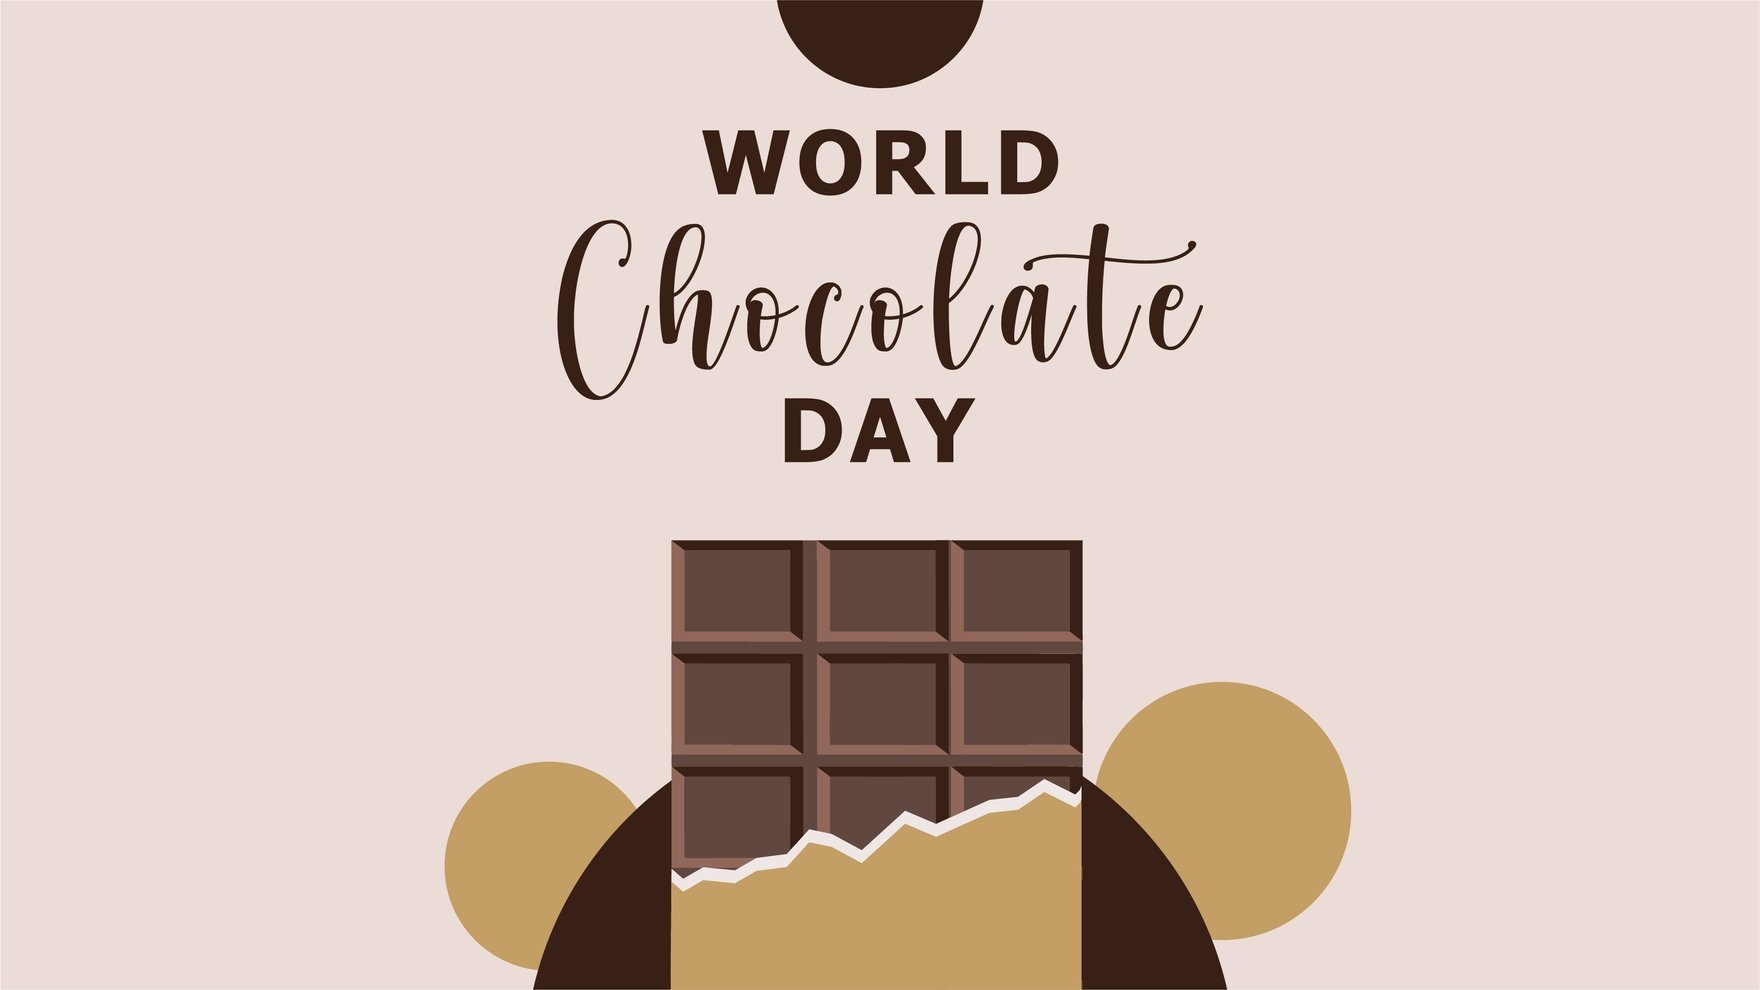 International Chocolate Day Image Background